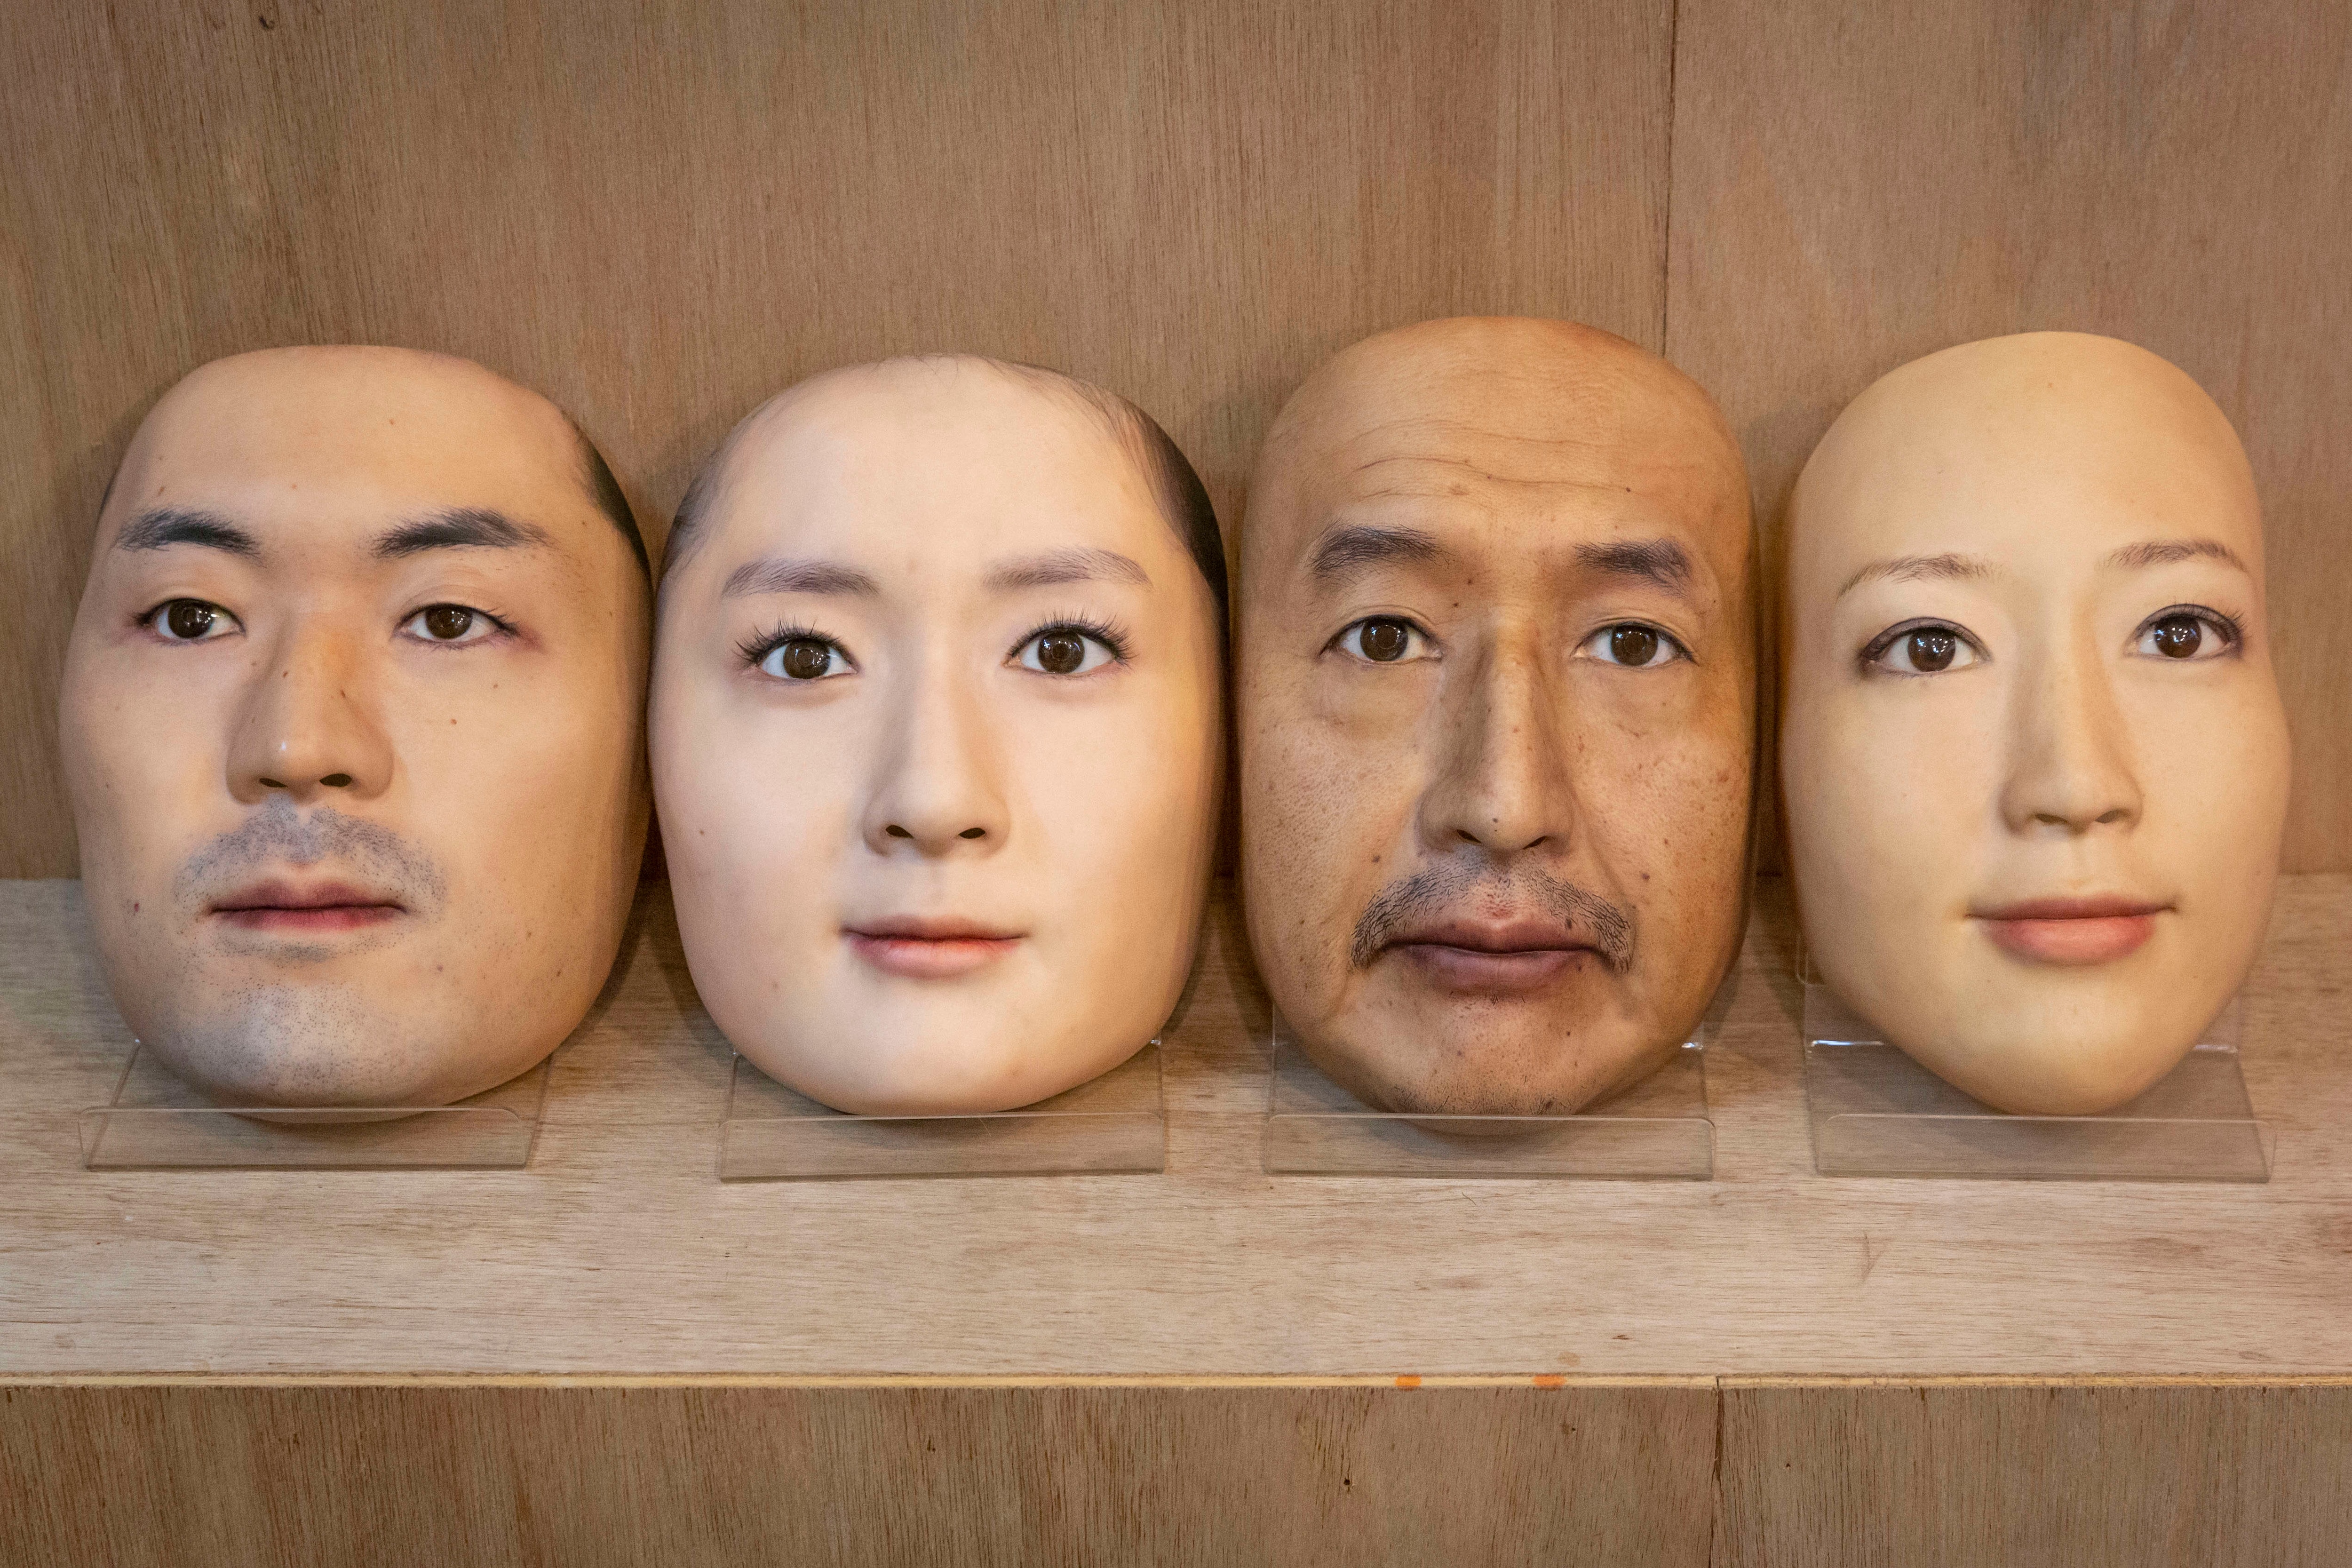 3D printed face masks from artist Shuhei Okawara